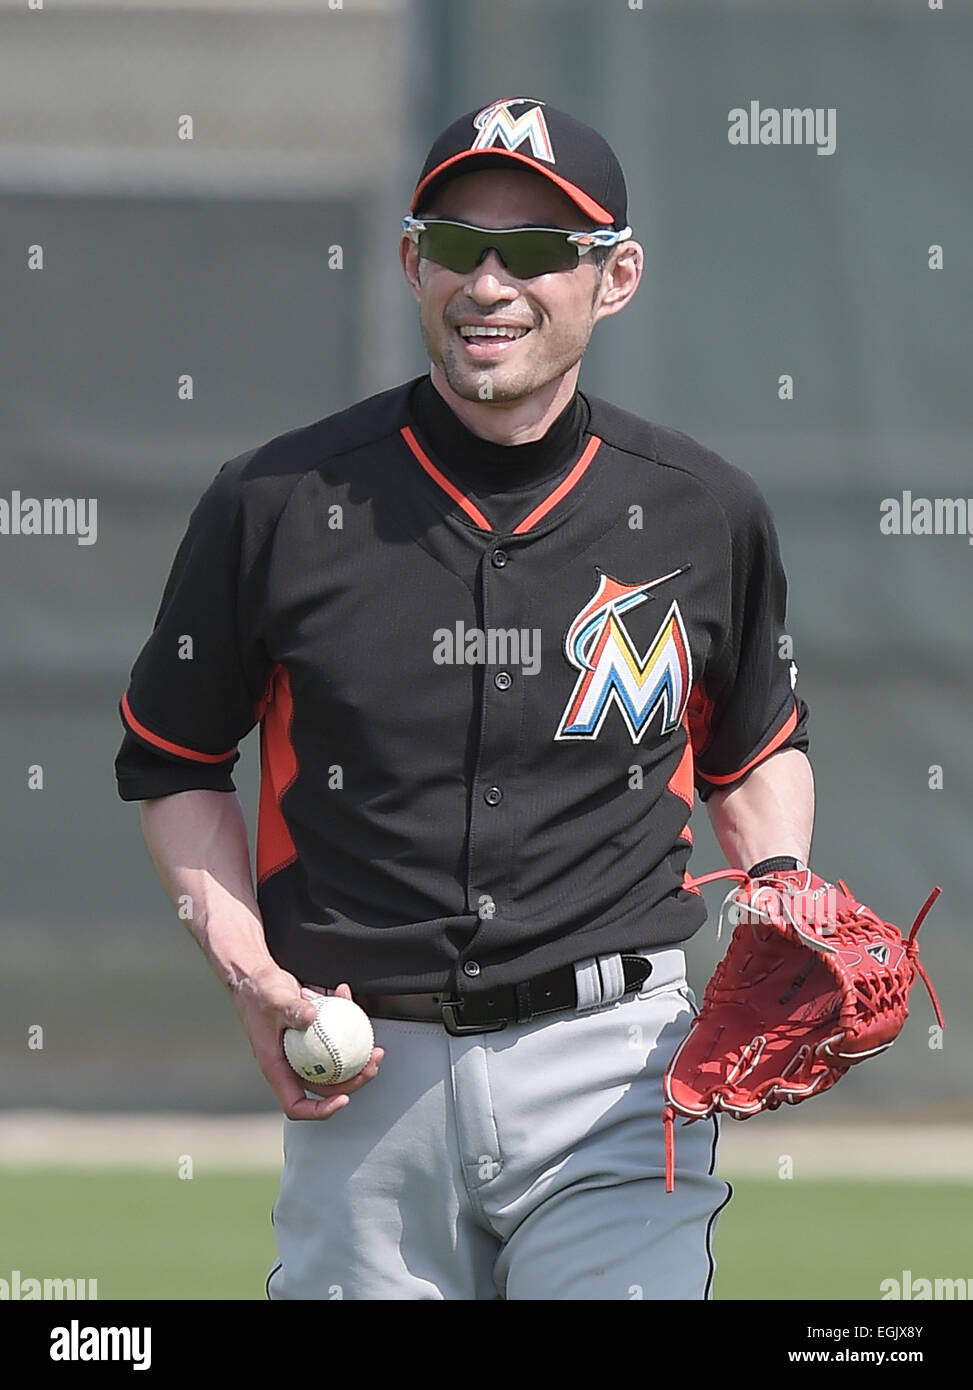 Jupiter, en Floride, USA. Feb 24, 2014. Ichiro Suzuki (Marlins MLB Marlins de Miami) : camp de formation du printemps à Jupiter, en Floride, États-Unis . © AFLO/Alamy Live News Banque D'Images